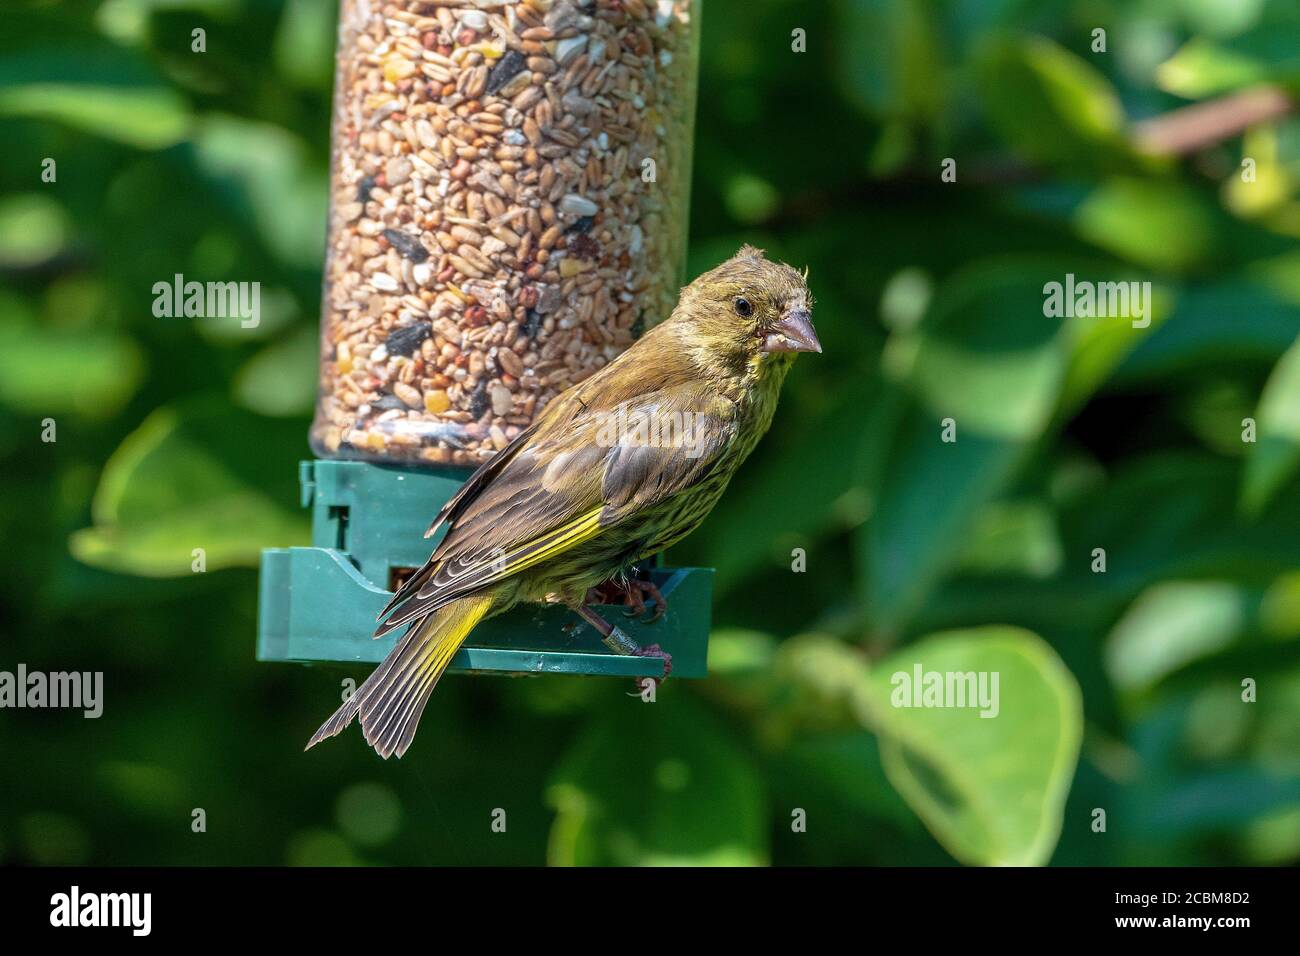 Common garden bird the Greenfinch at a feeding station. Stock Photo